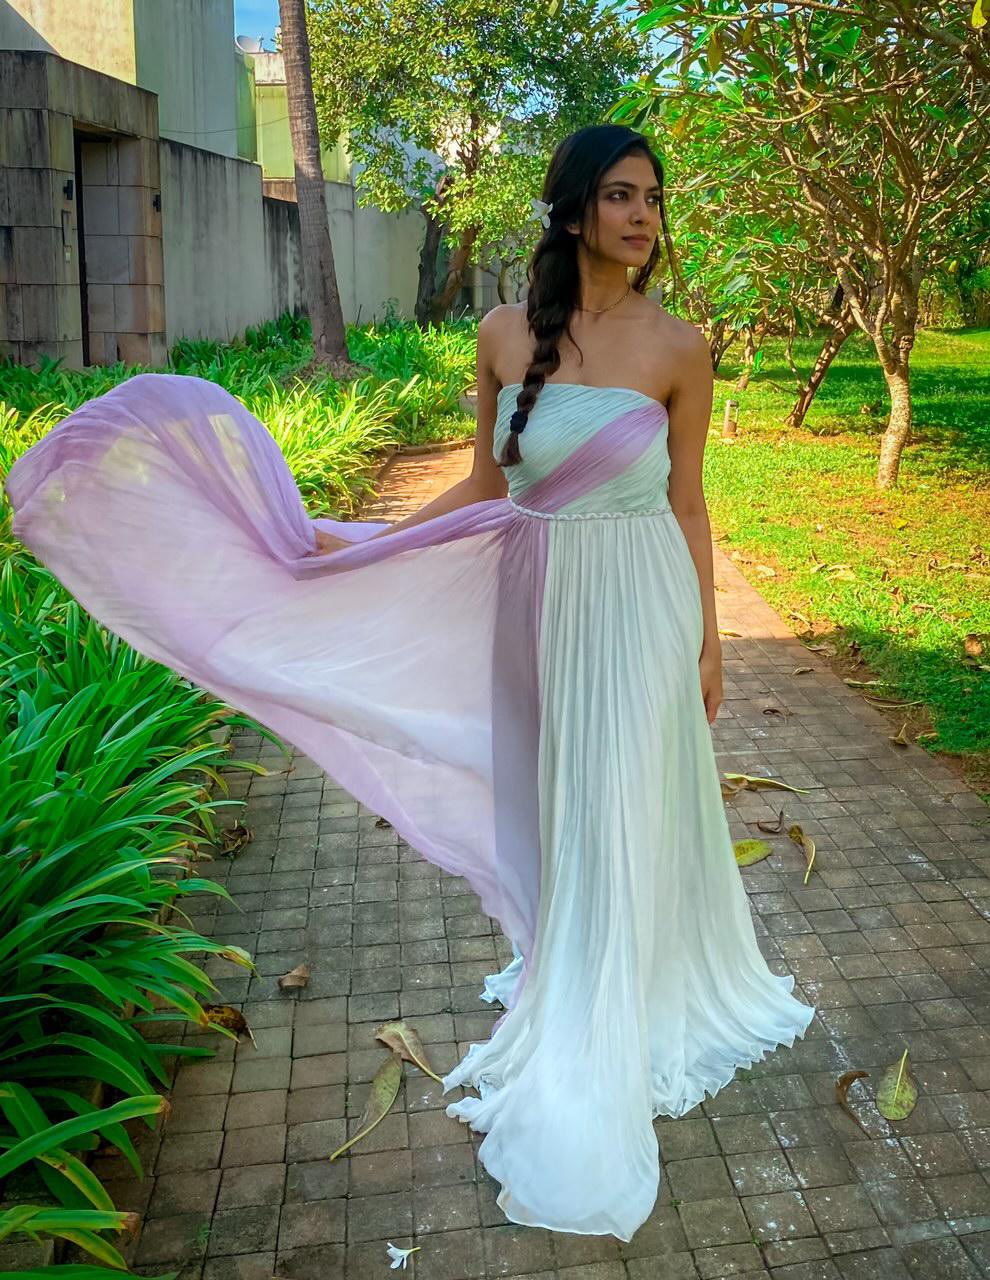 Master actress Malavika Mohanan’s new pics from Goa is going viral